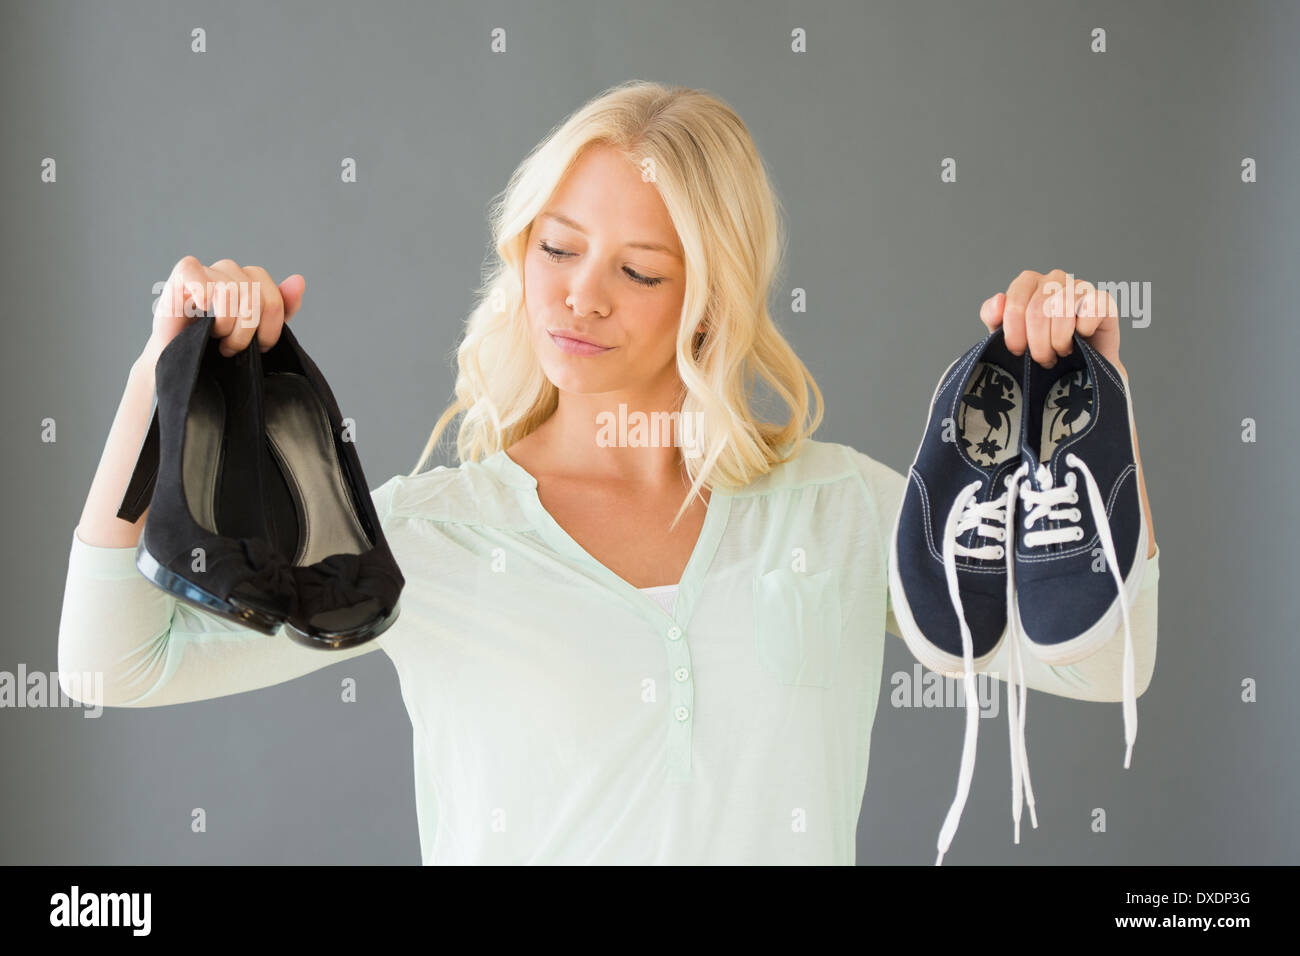 Portrait of young woman holding shoes Banque D'Images